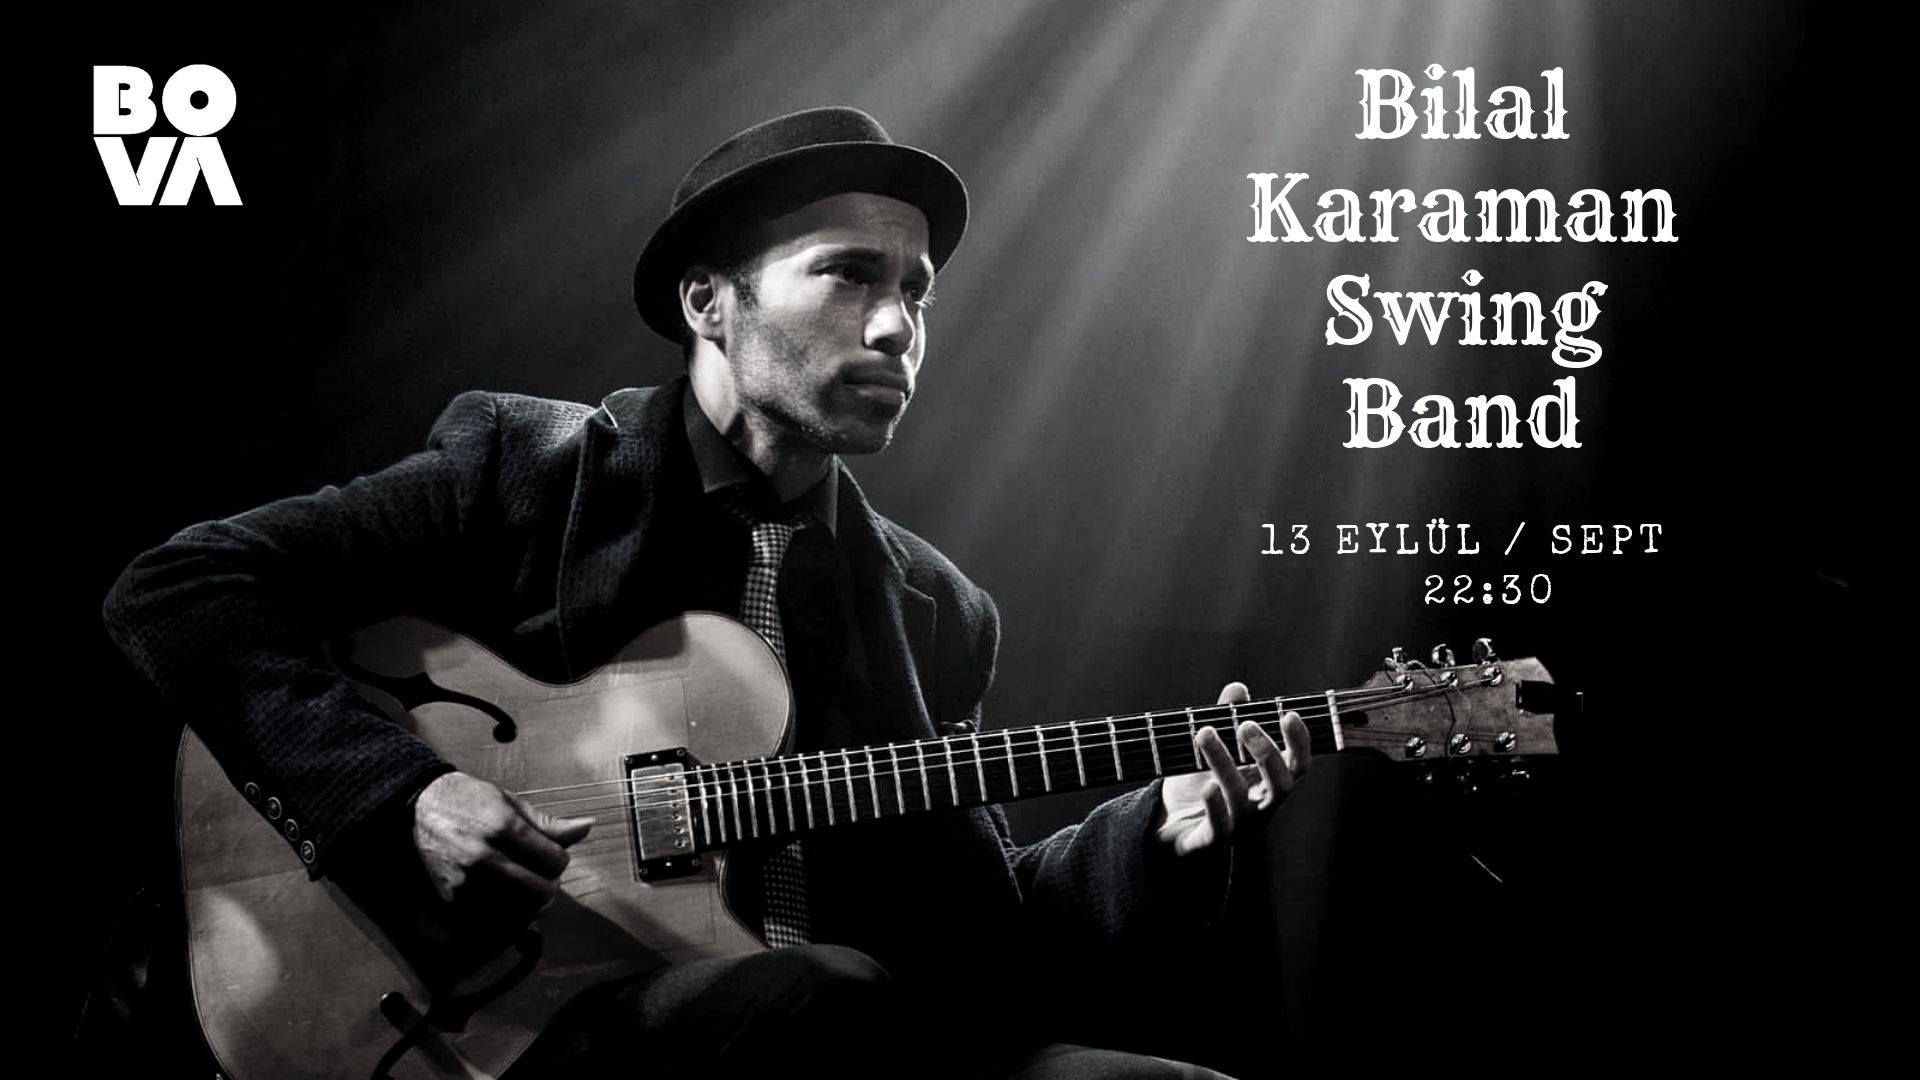 Bilal Karaman Swing Band